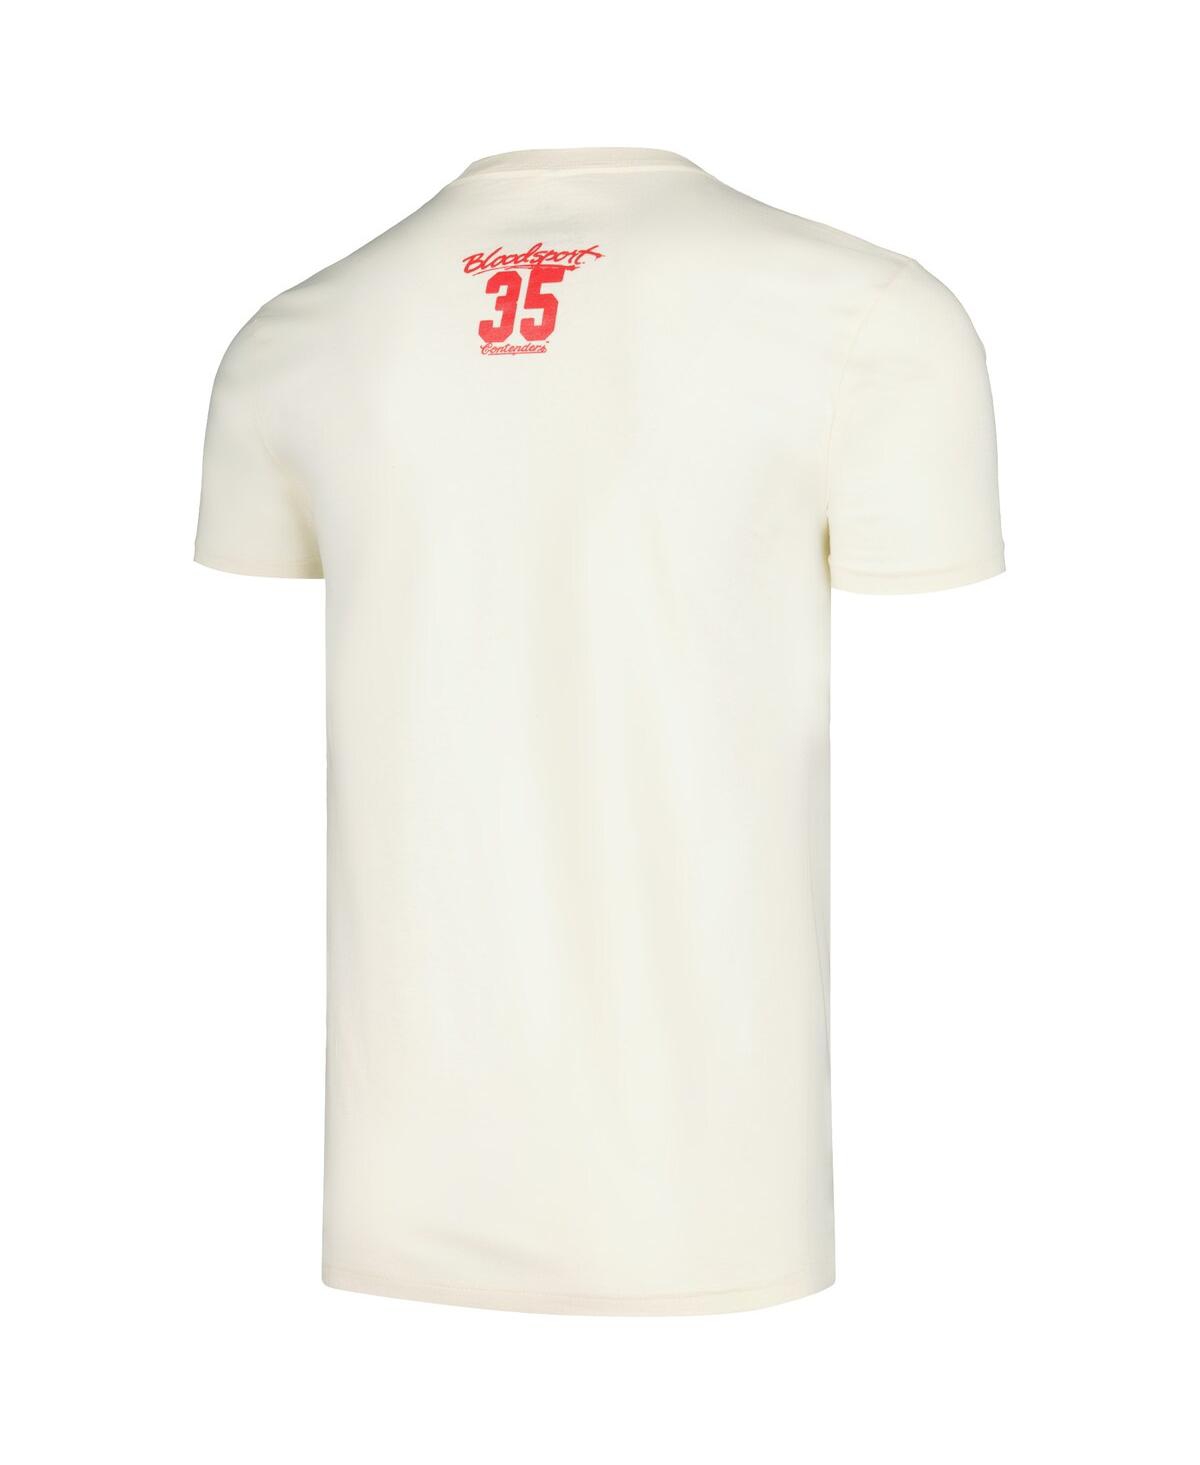 Shop Contenders Clothing Men's  Cream Bloodsport 35th Anniversary T-shirt